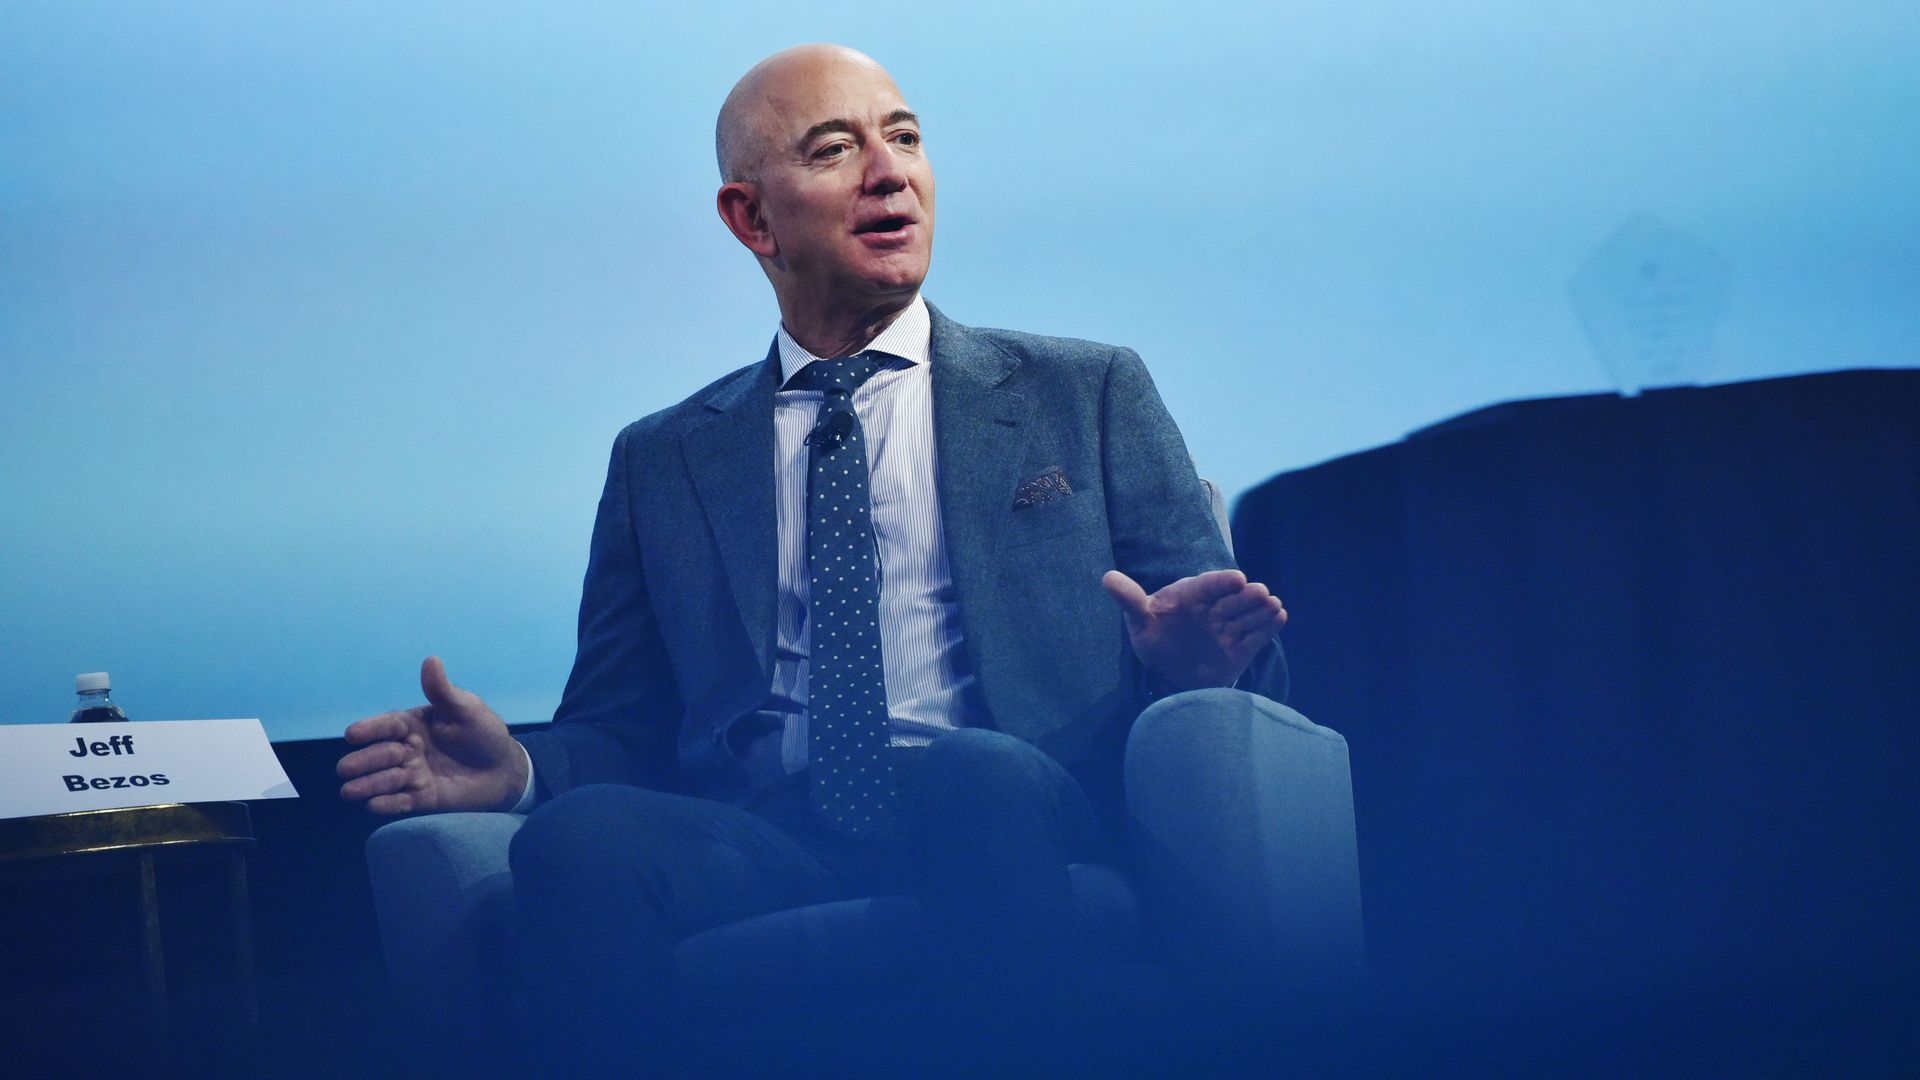 Picture of Jeff Bezos